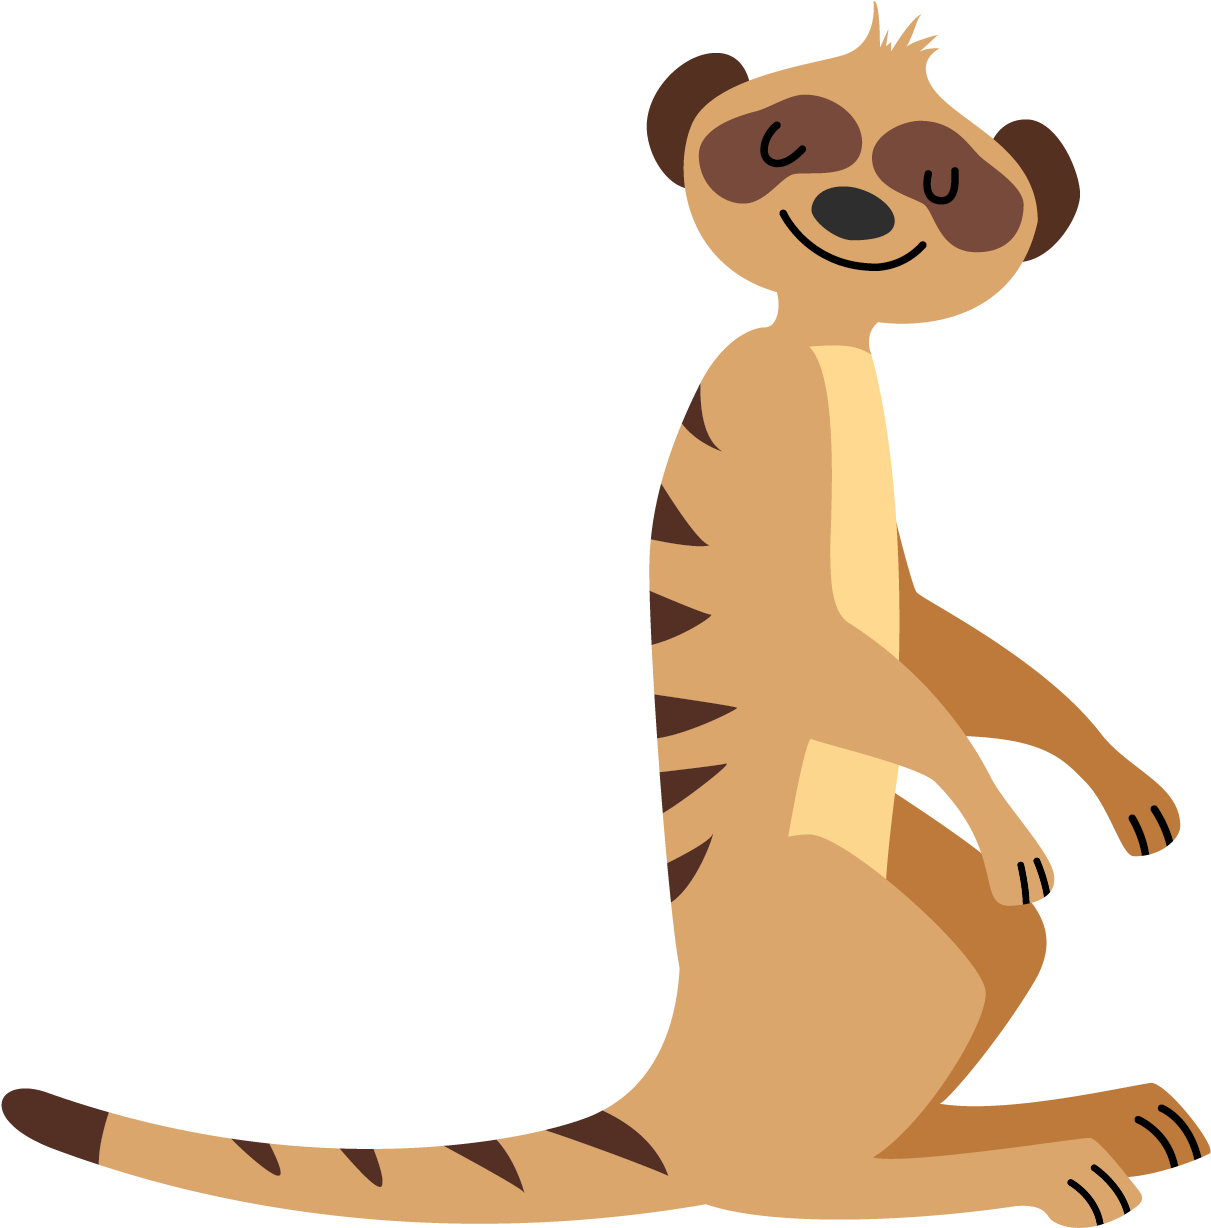 Animated Meerkat Sitting Graphic